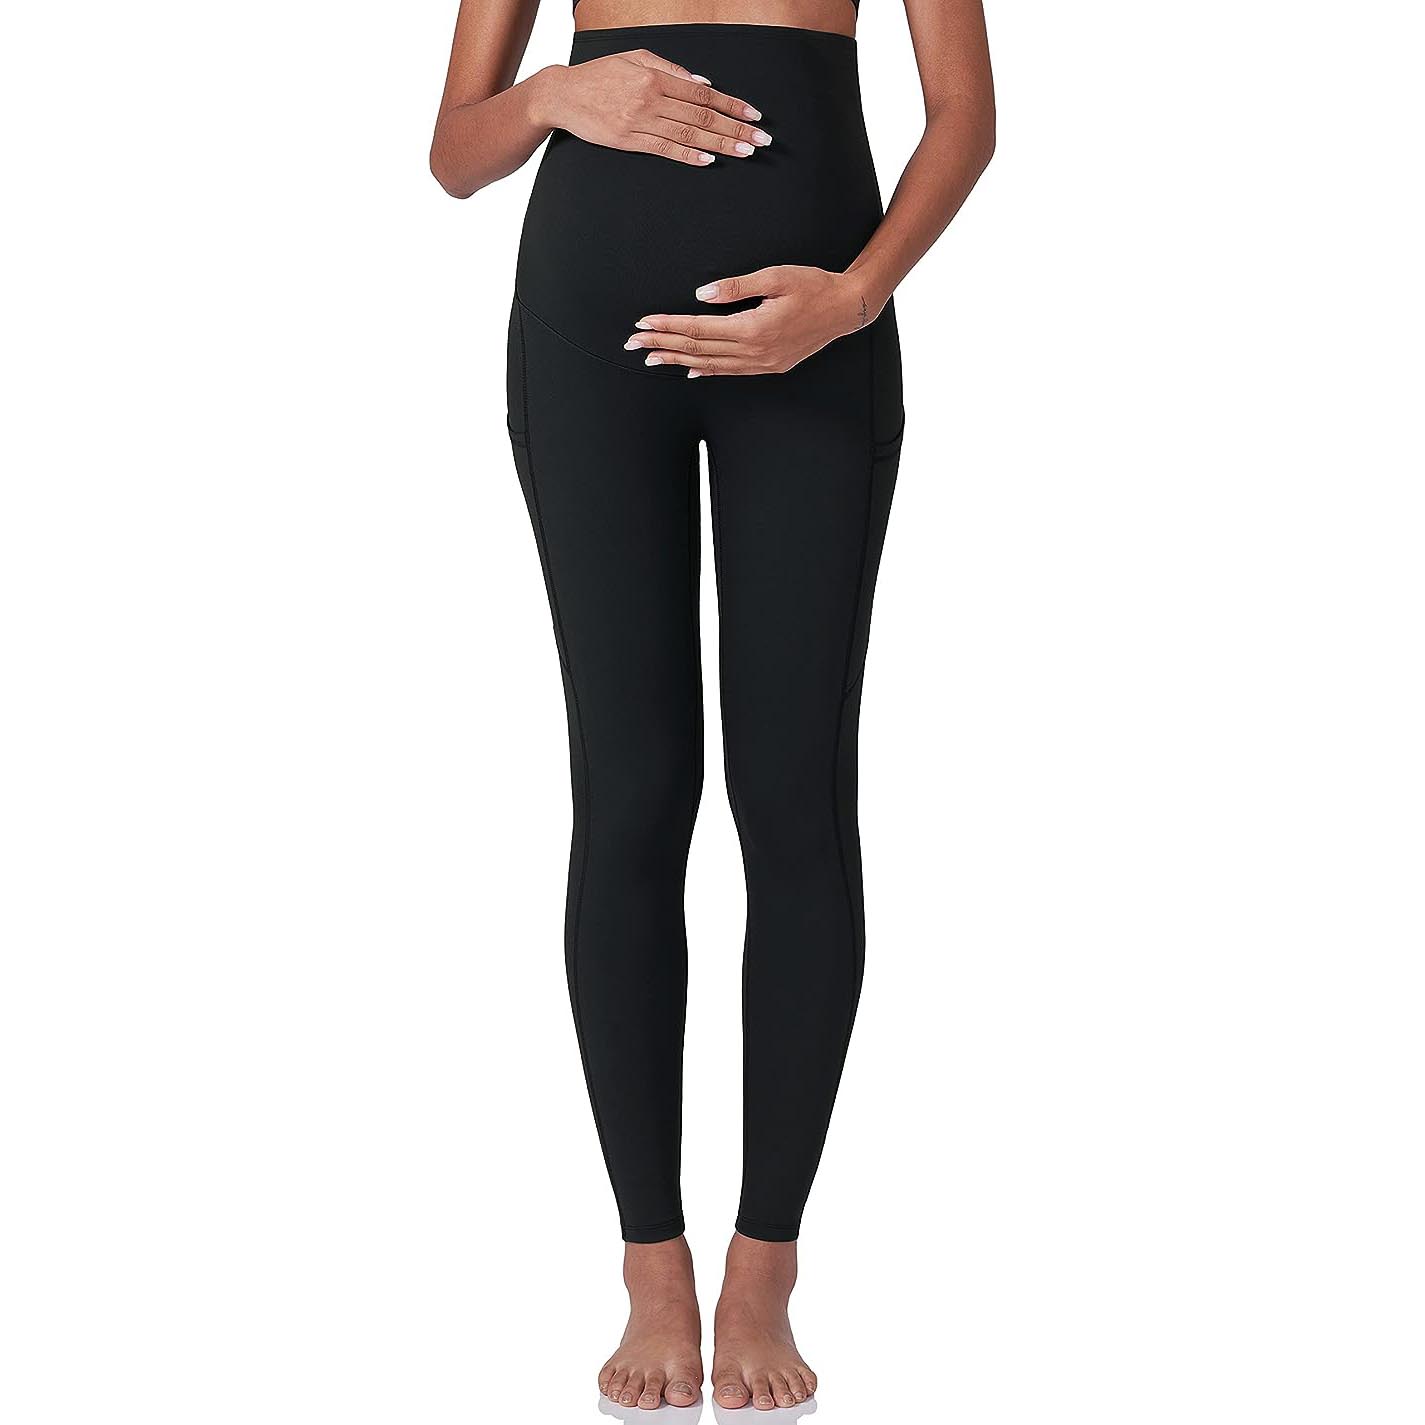 Woman holding belly bump in black leggings